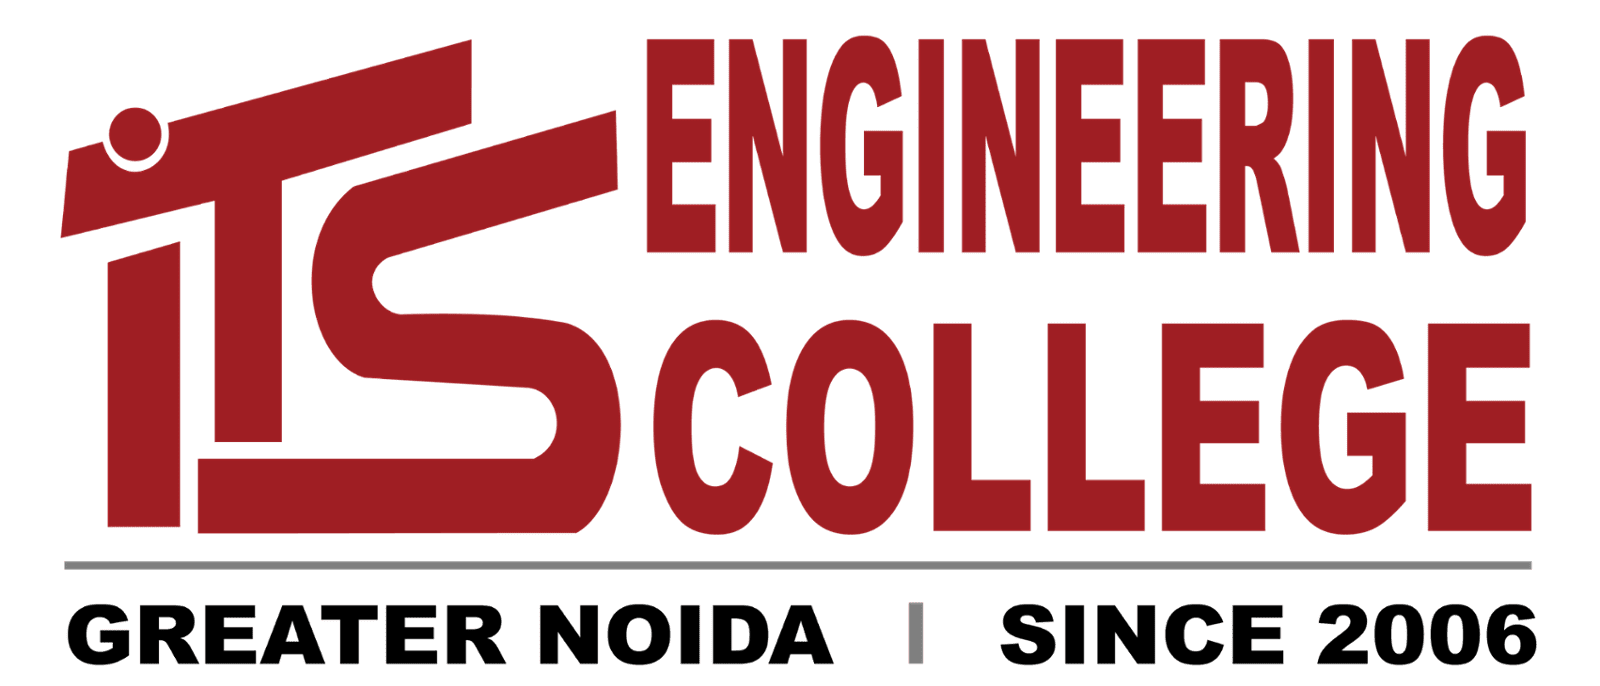 Logo Philosophy ITS Engineering College